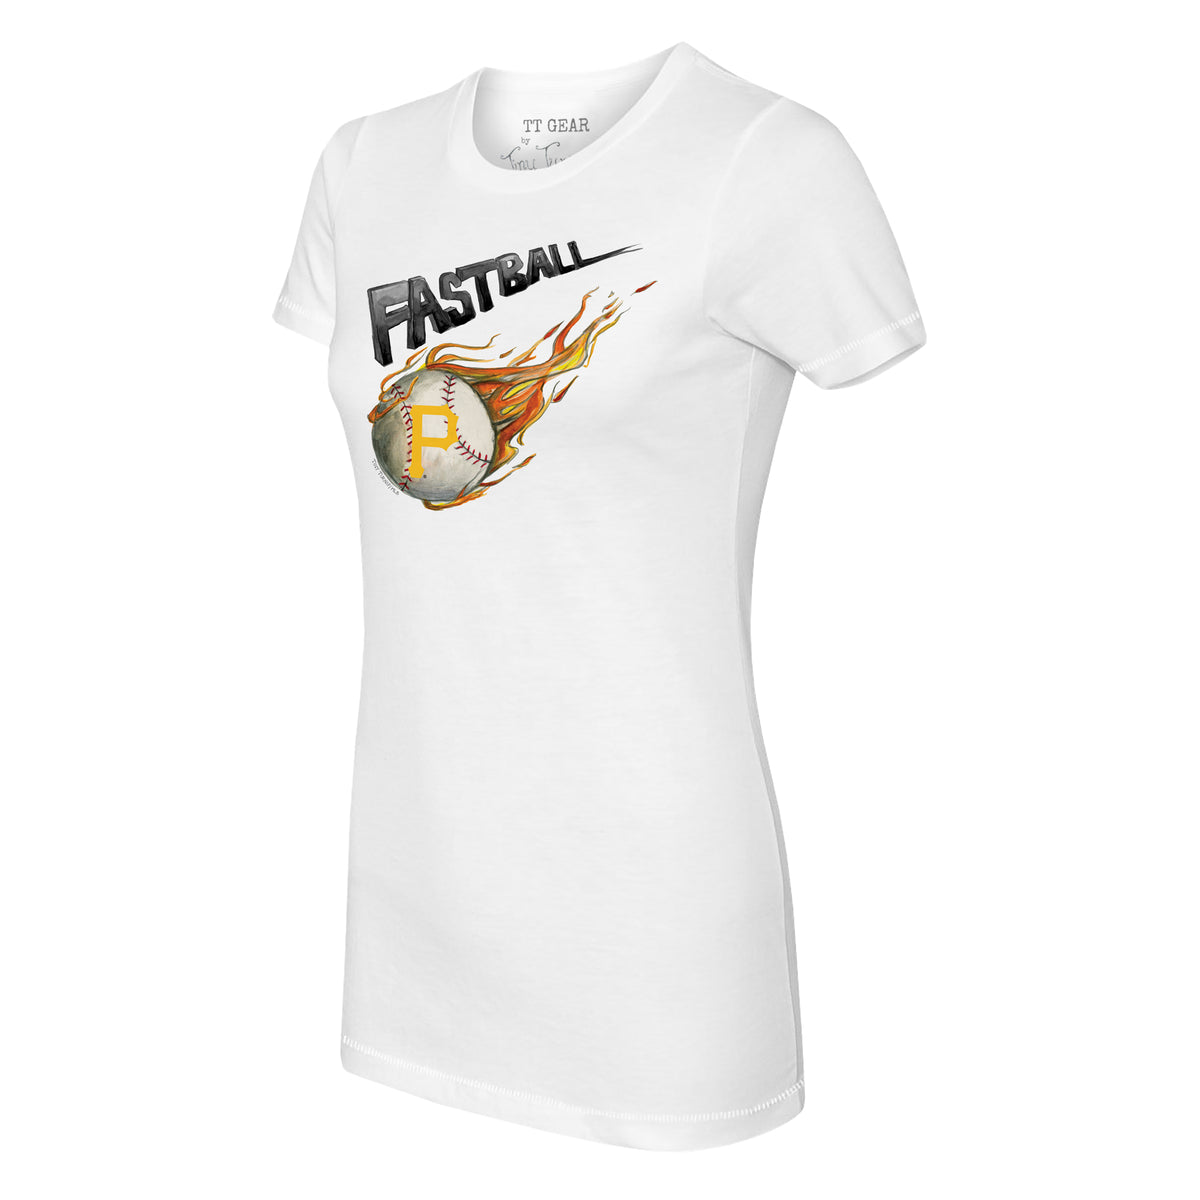 Pittsburgh Pirates Fastball Tee Shirt